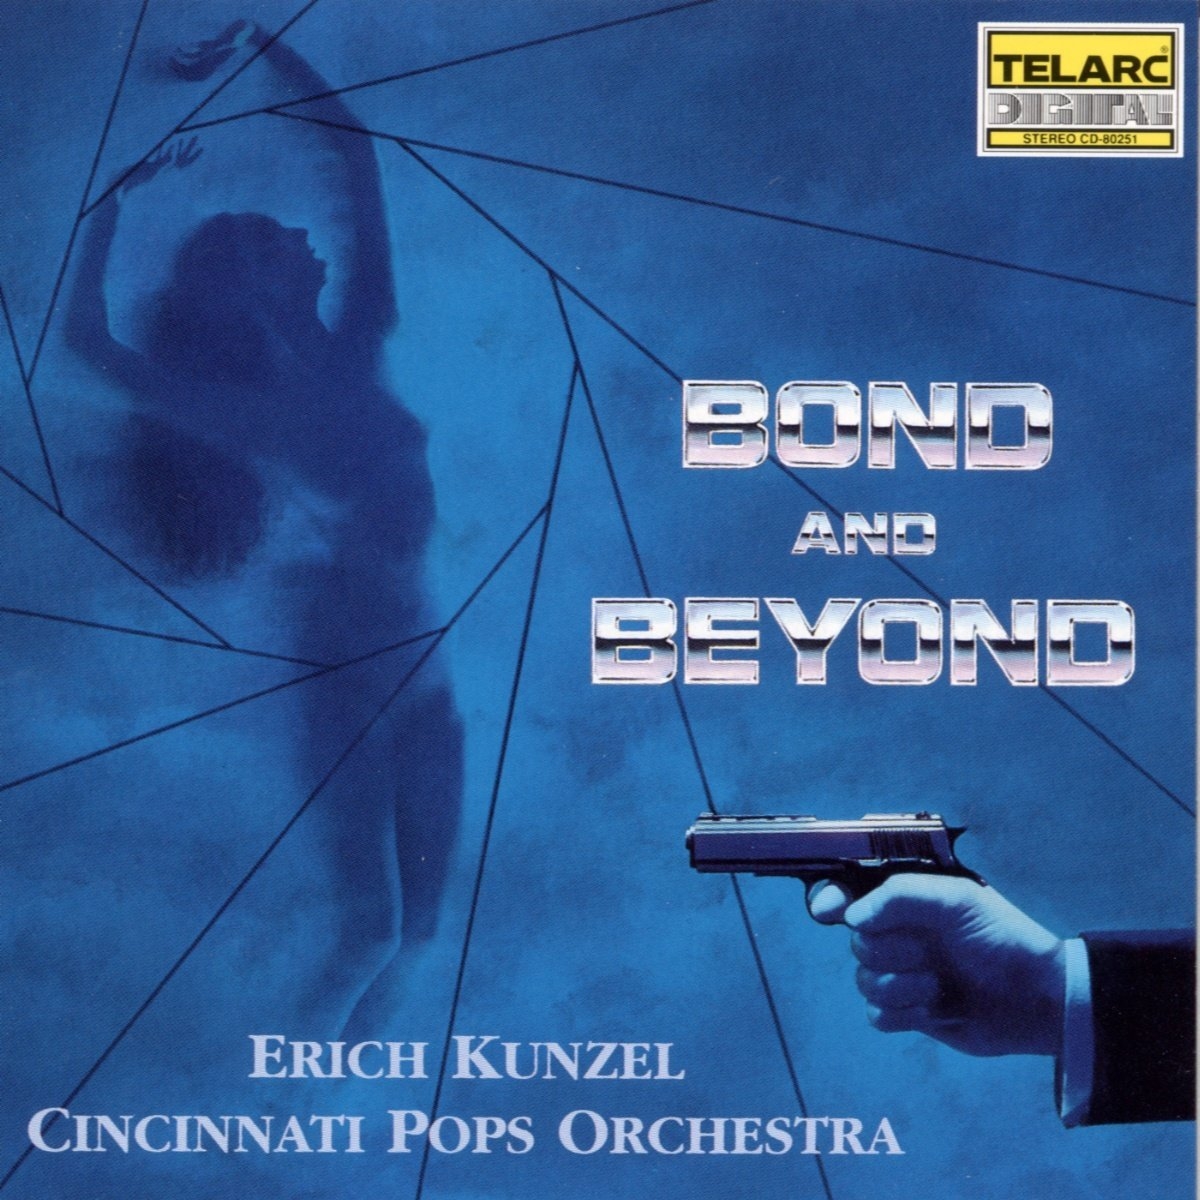 Cincinnati Pops Orchestra - Bond and Beyond